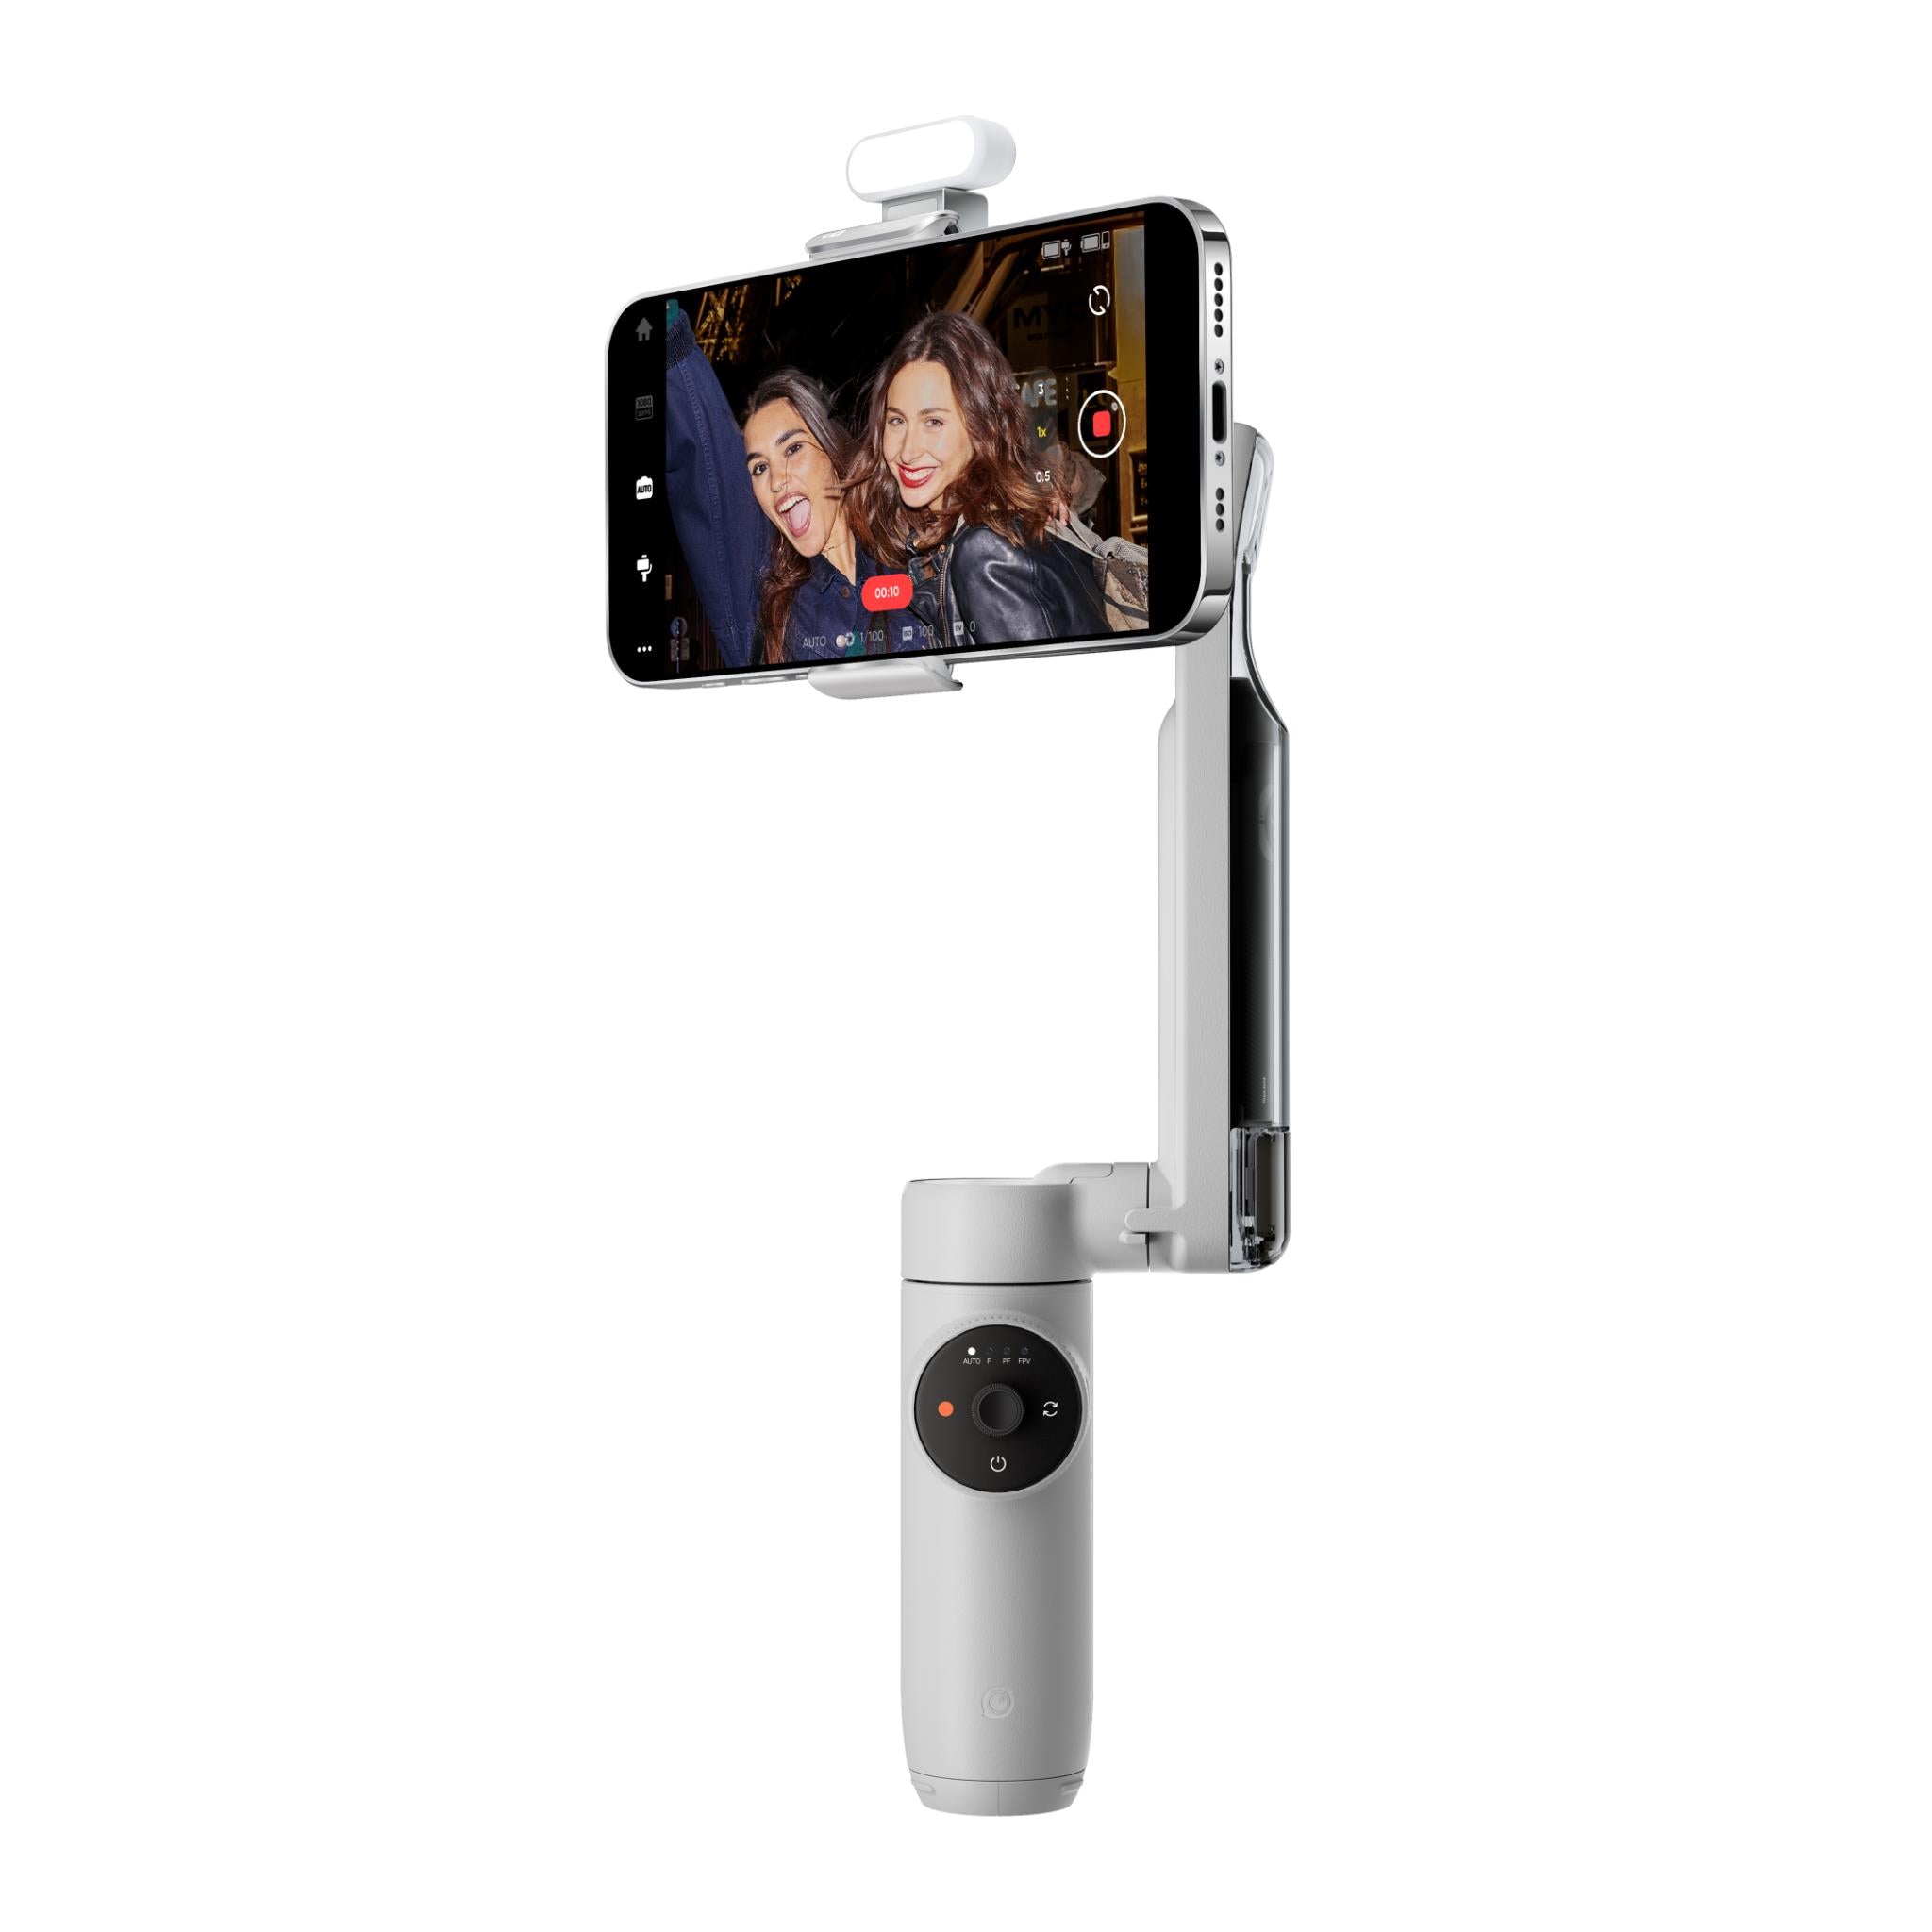 Insta360 GO 3 Action Camera (128GB) - JB Hi-Fi